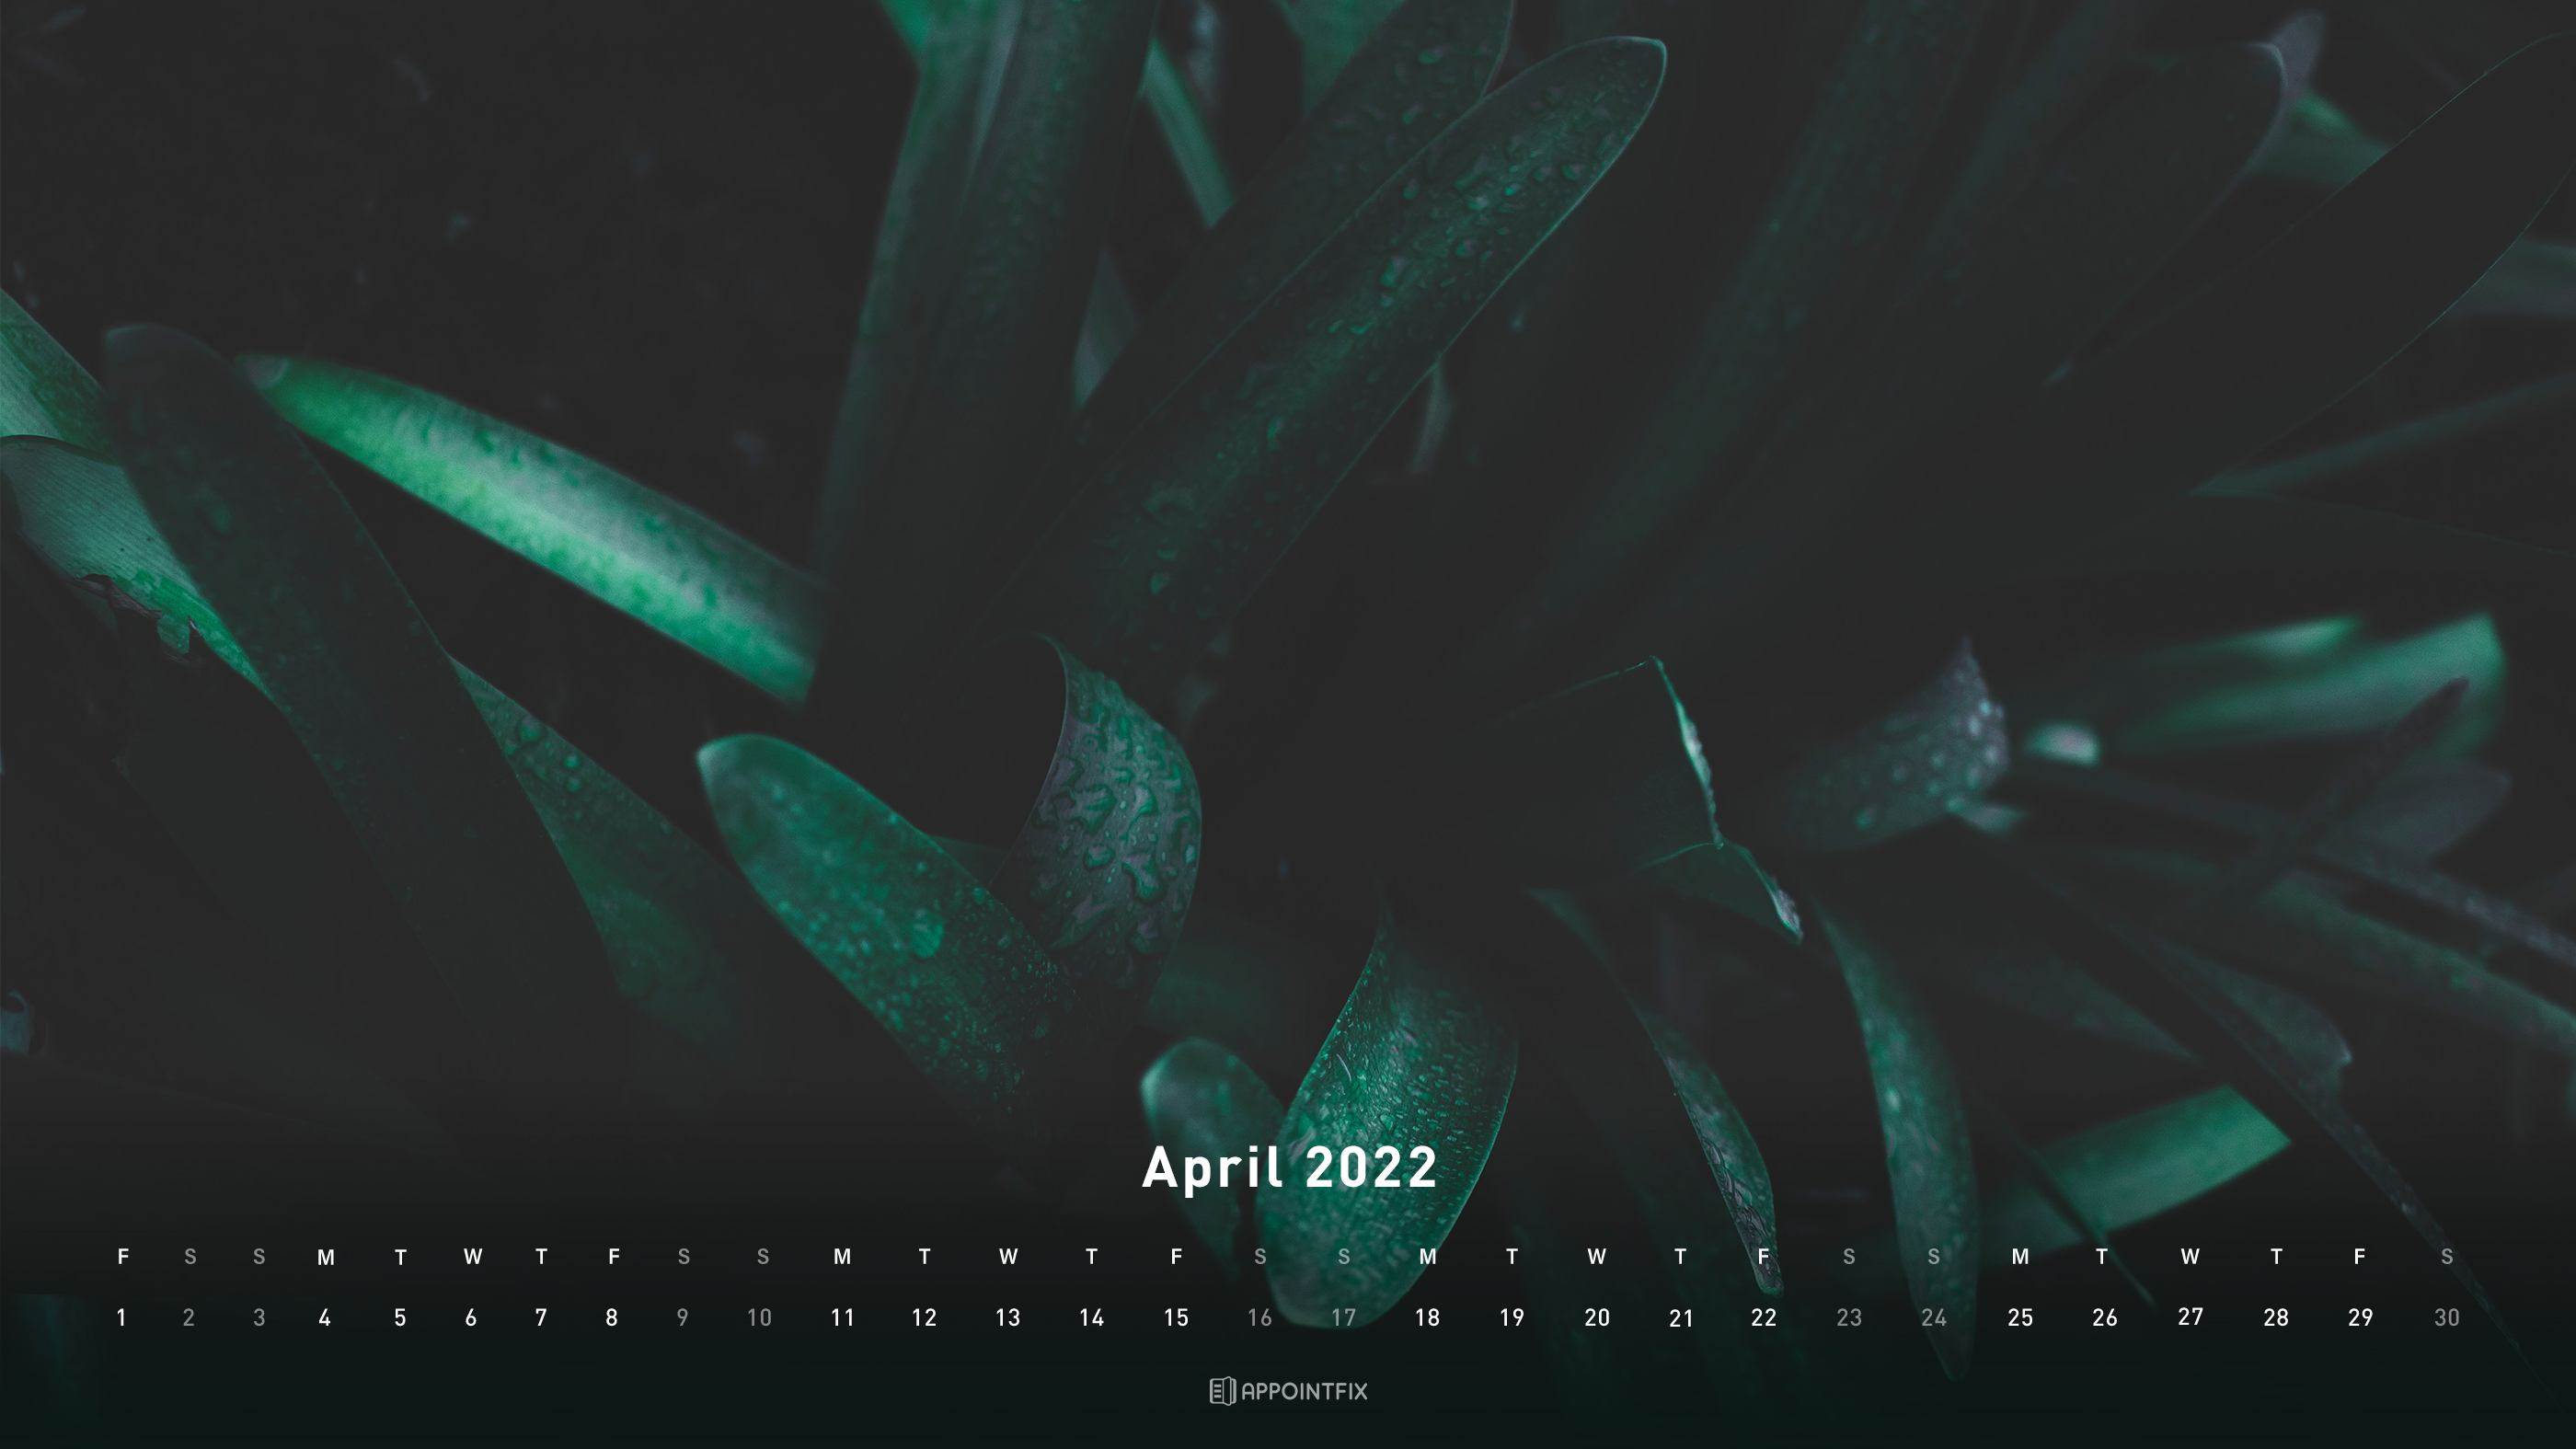 Free April 2022 Calendar Wallpaper